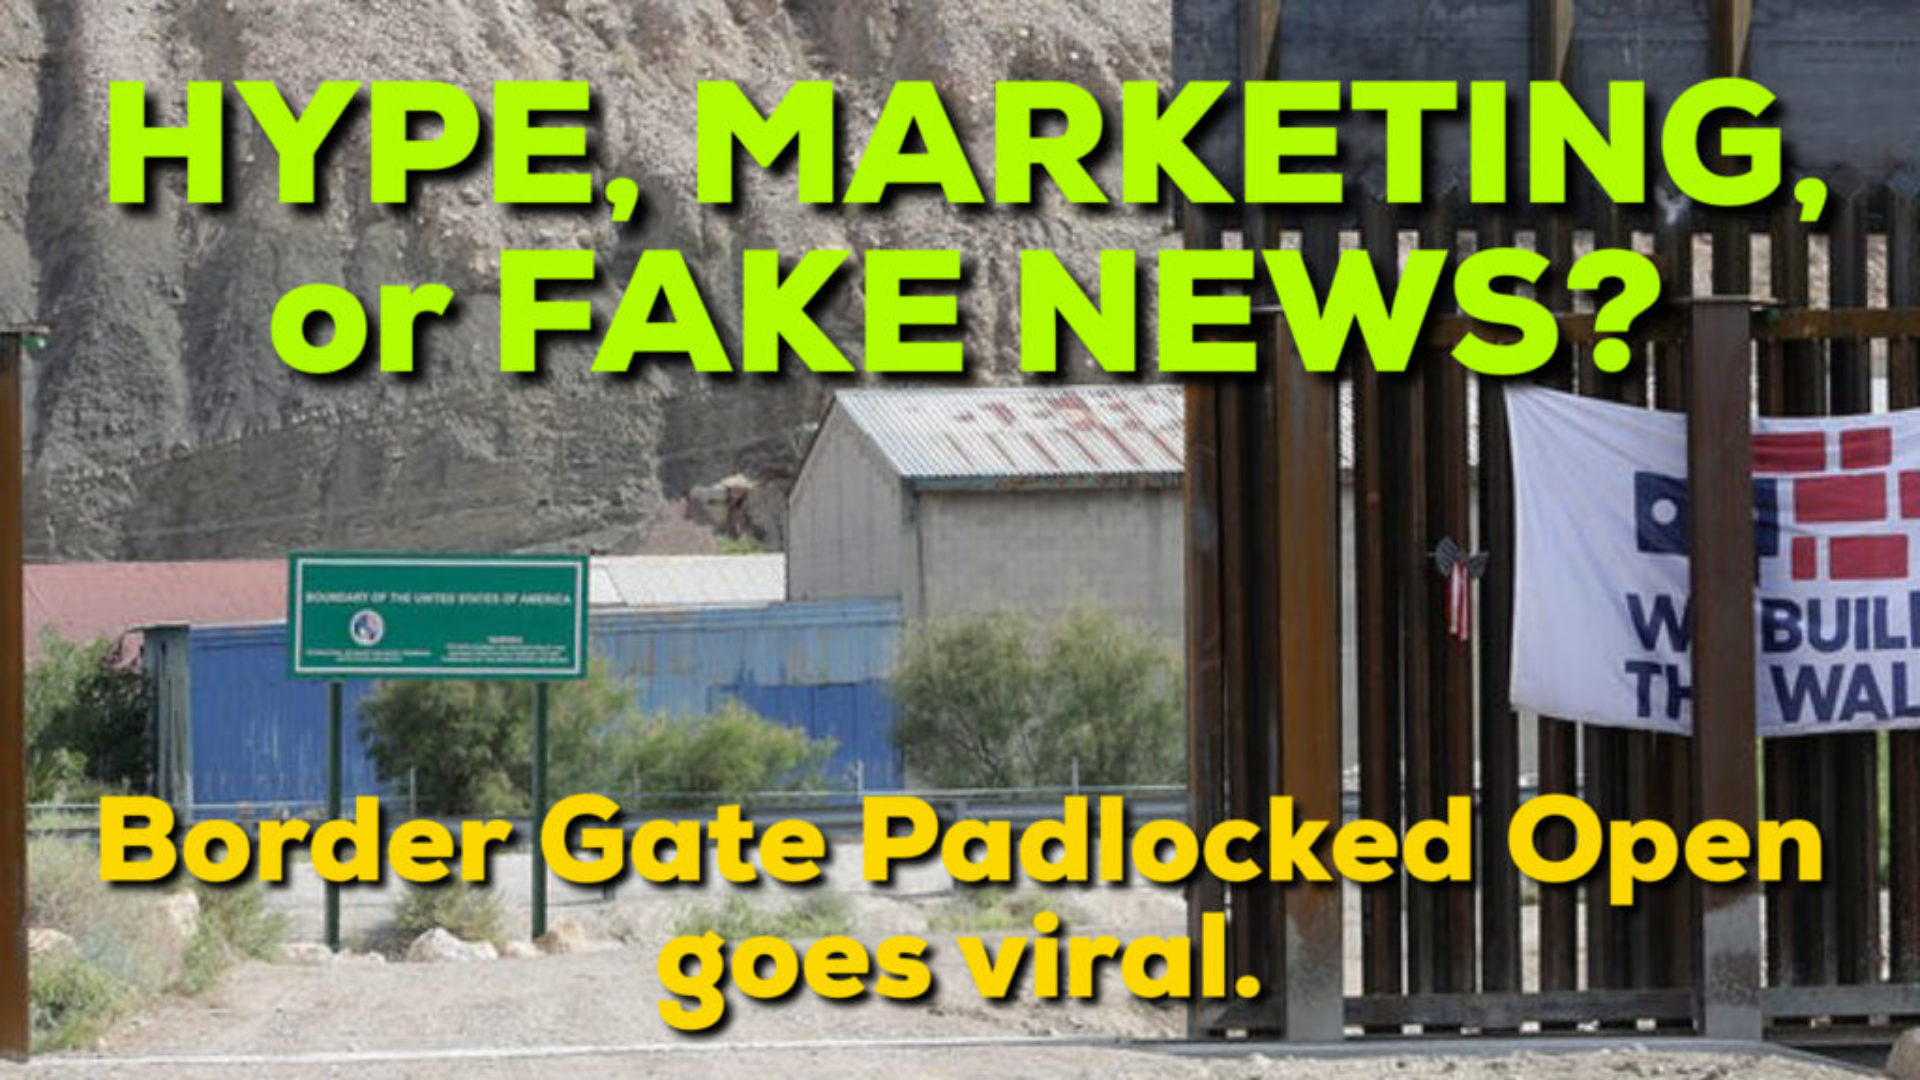 Border Gate Padlocked Open. Real? Or Fake News?